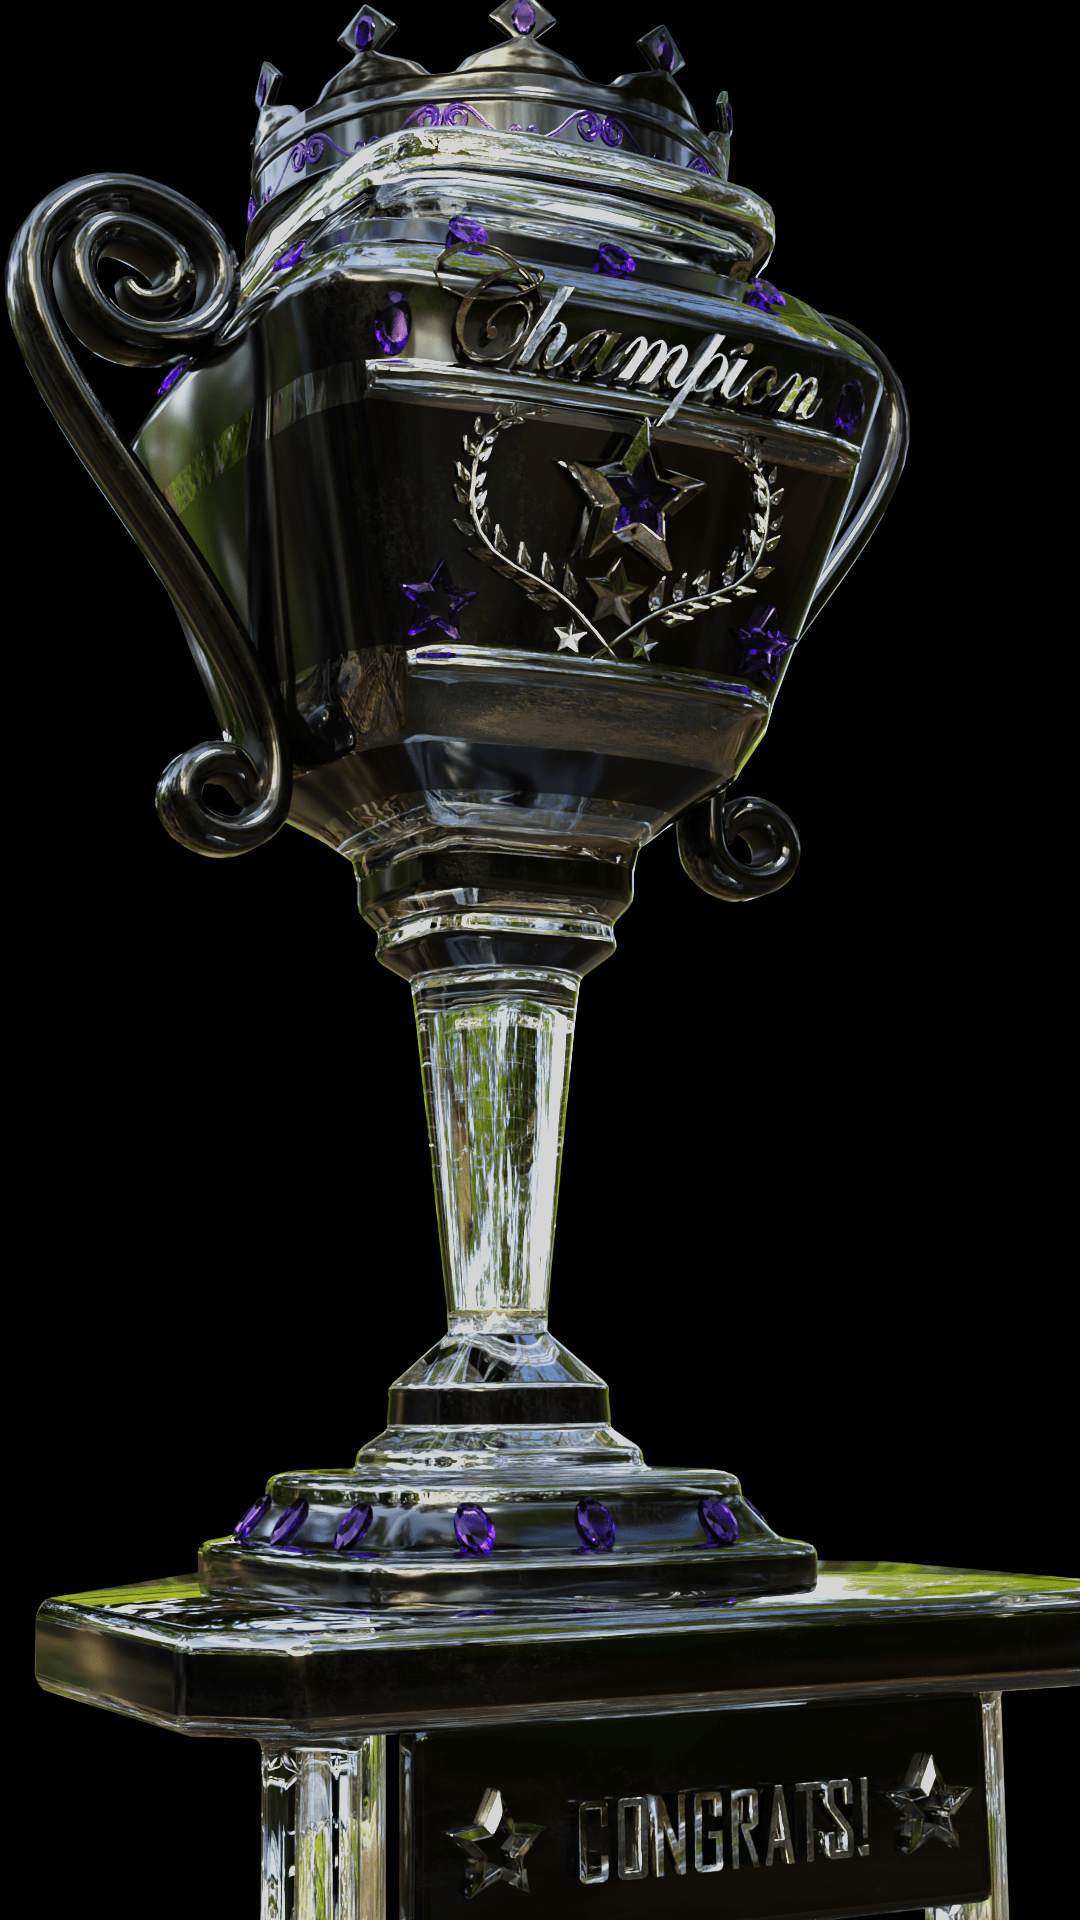 3D trophy Copa luxury luxurious blender Noai